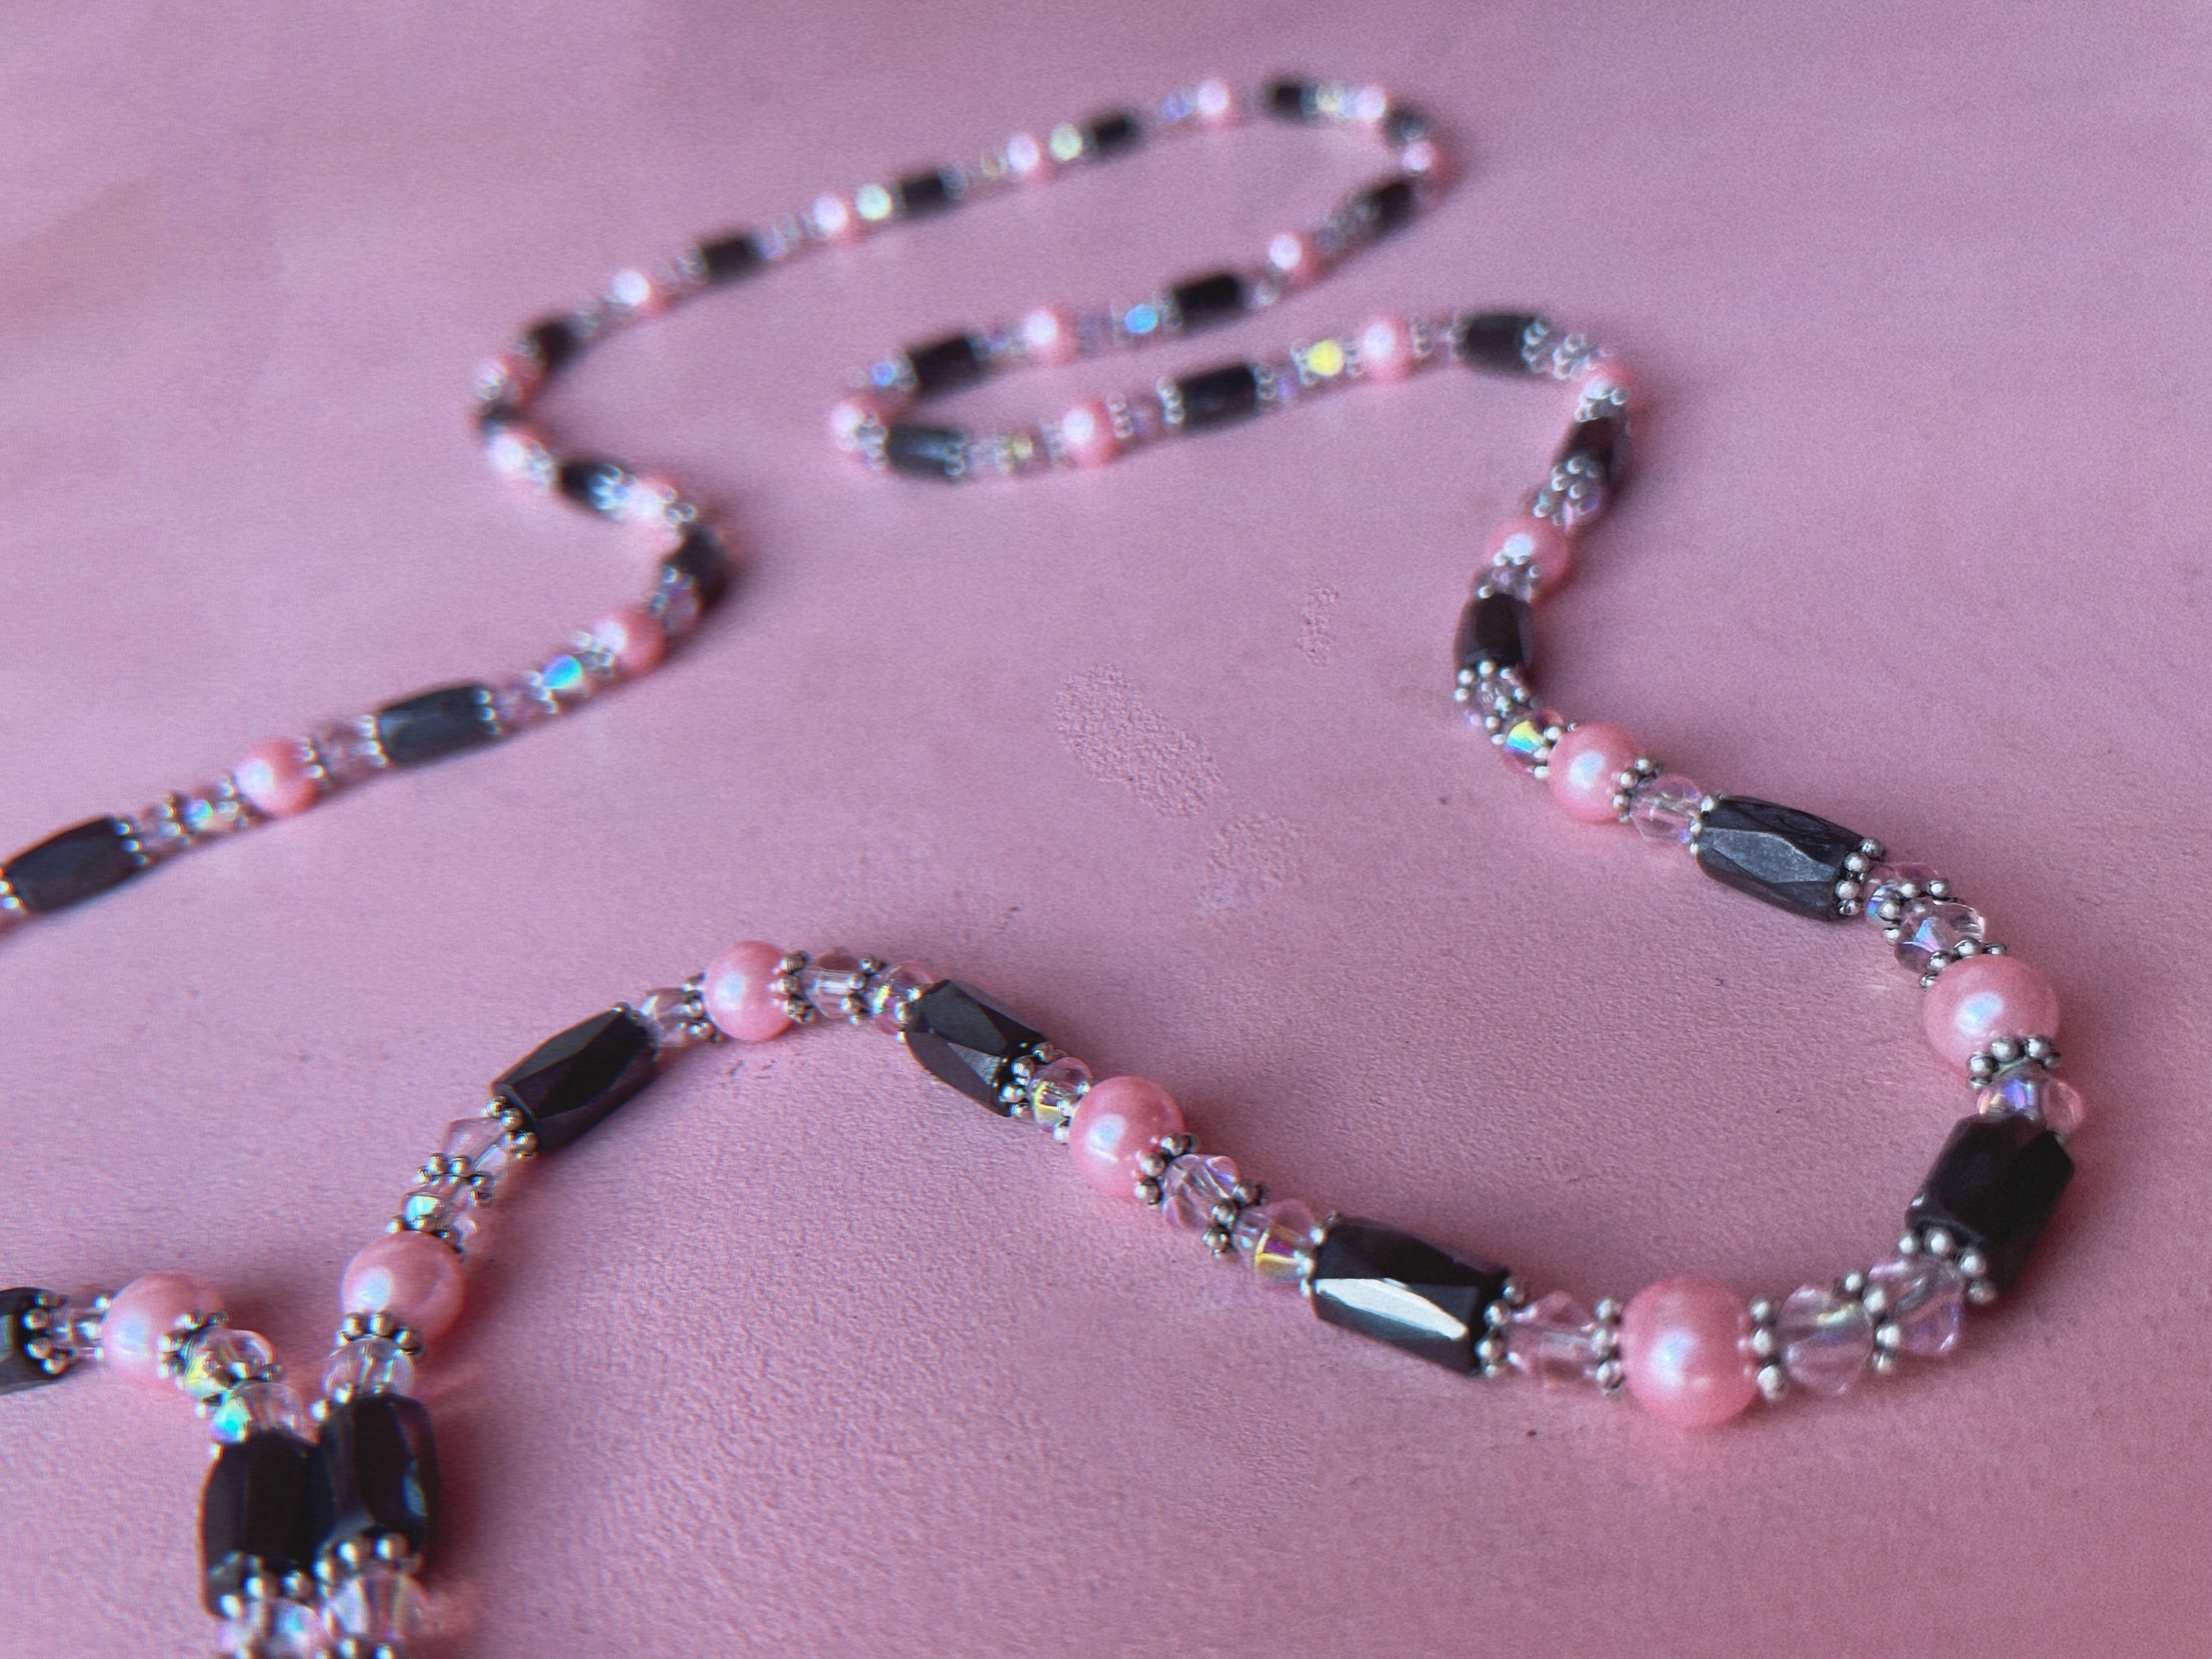 【送料無料】Magnet beads necklace/bracelet